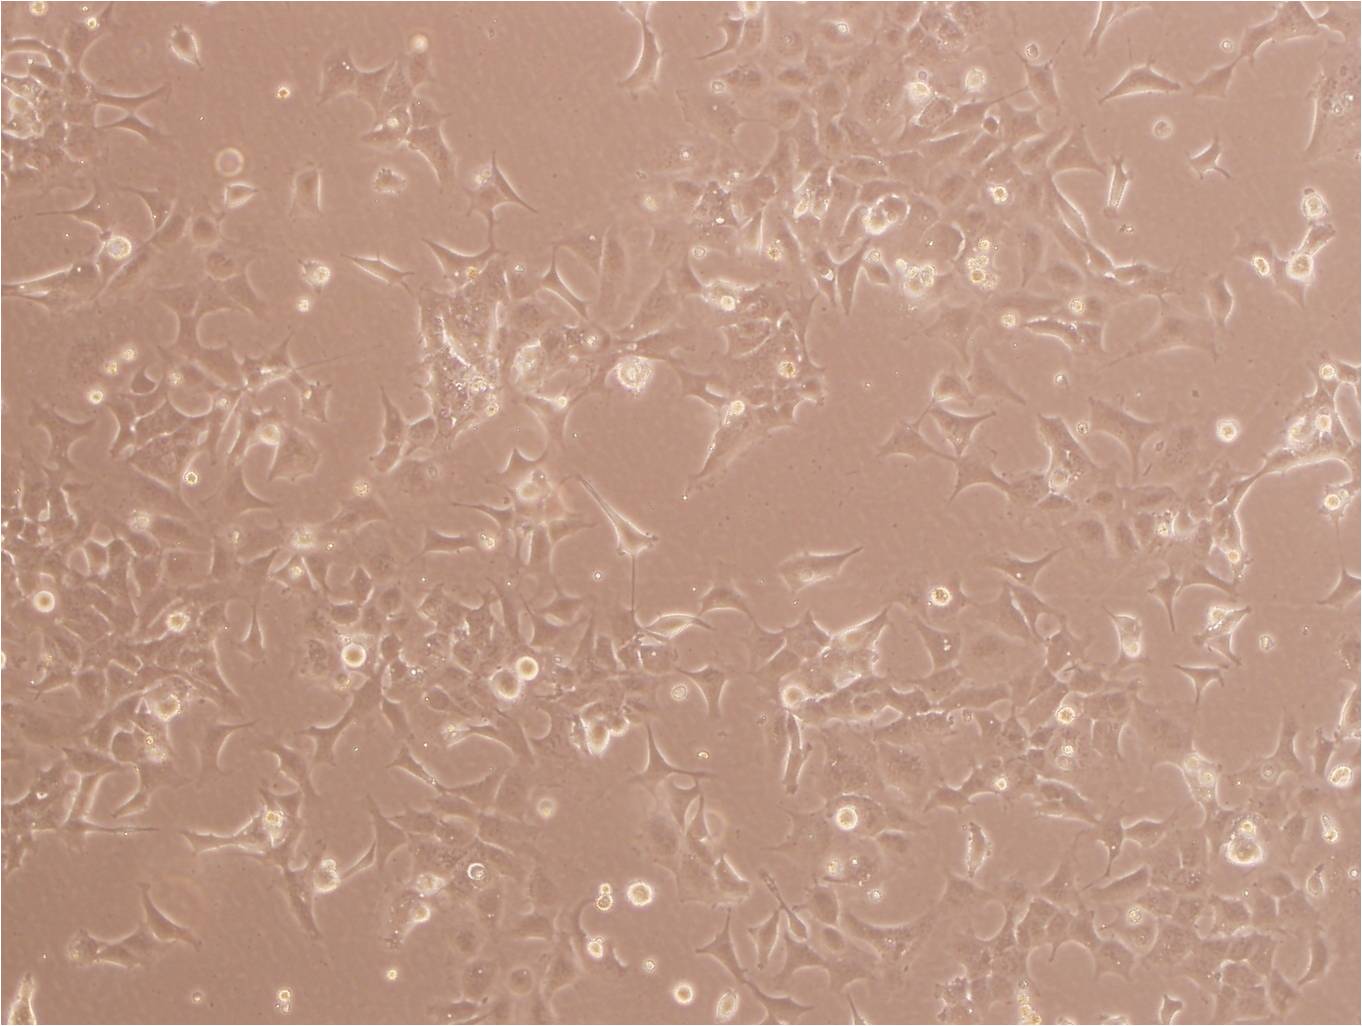 NCI-H838 cell line人肺癌细胞系